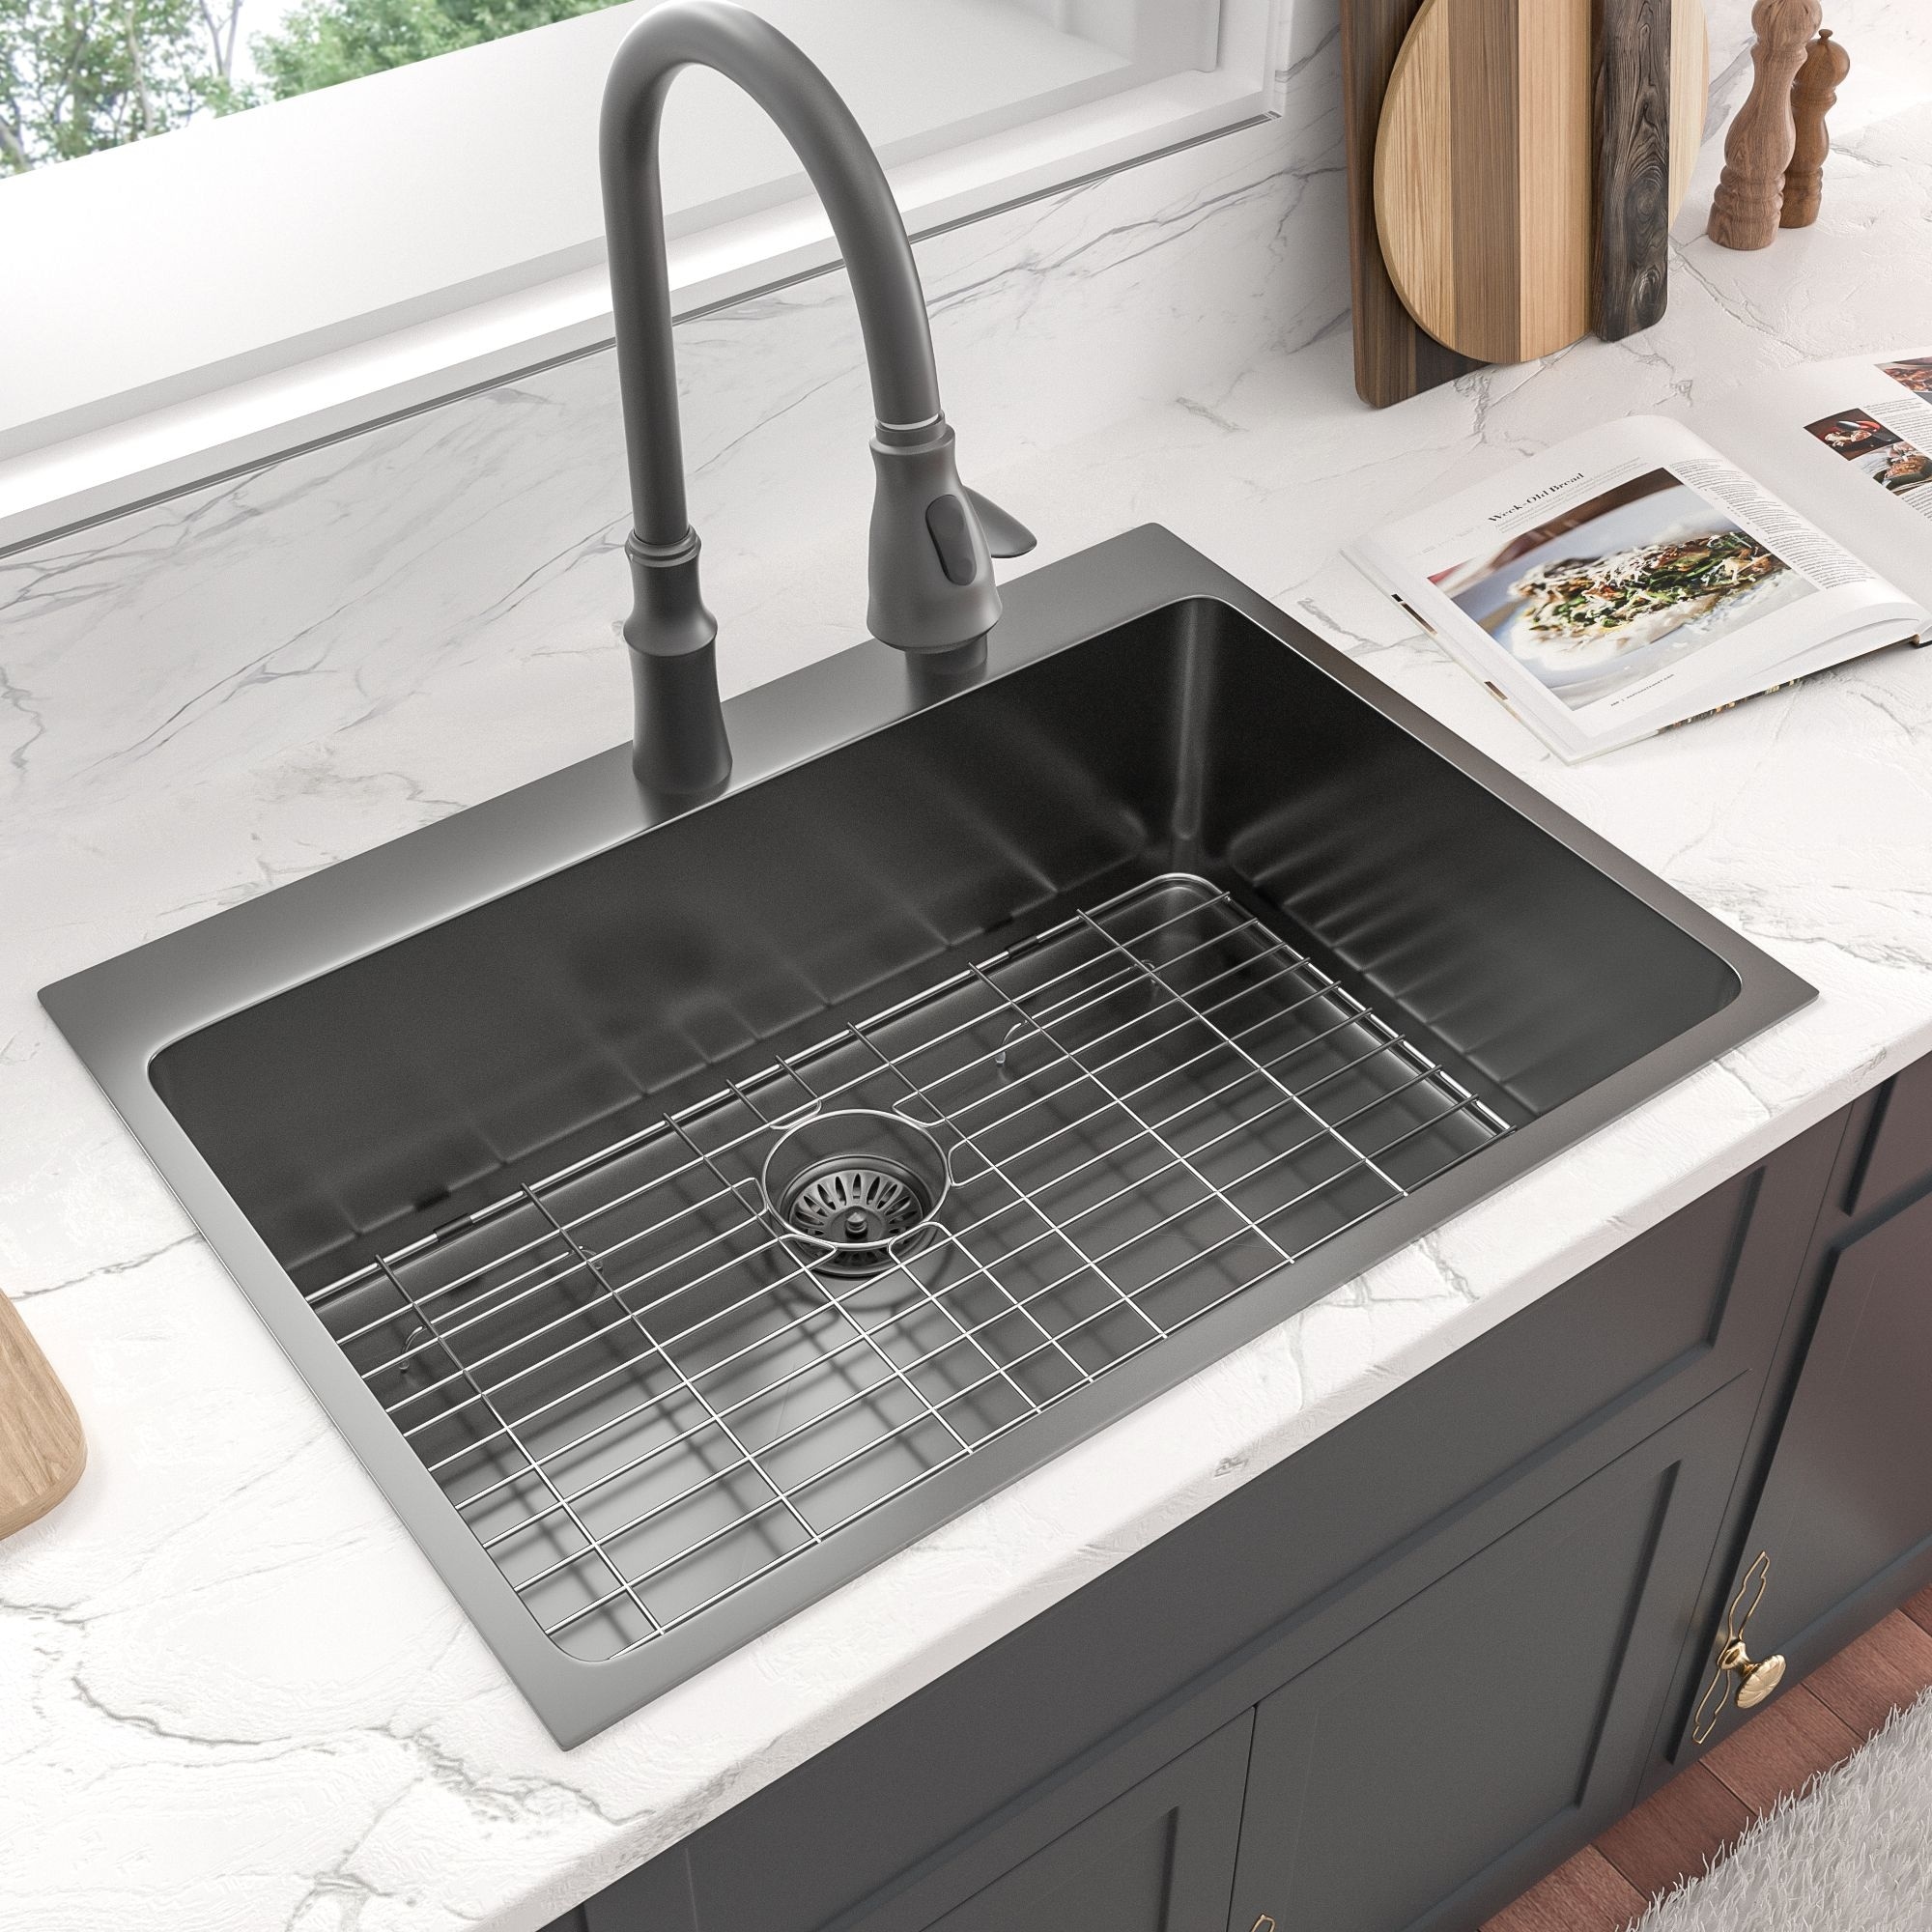 https://ak1.ostkcdn.com/images/products/is/images/direct/dc825f01d4b549ccc8779d61c91a620b4c6d188f/Lordear-30x22-inch-Kitchen-Sink-Drop-In-Gunmetal-Black-16-Gauge-Stainless-Steel-Single-Bowl-Topmount-Kitchen-Sink-Basin.jpg